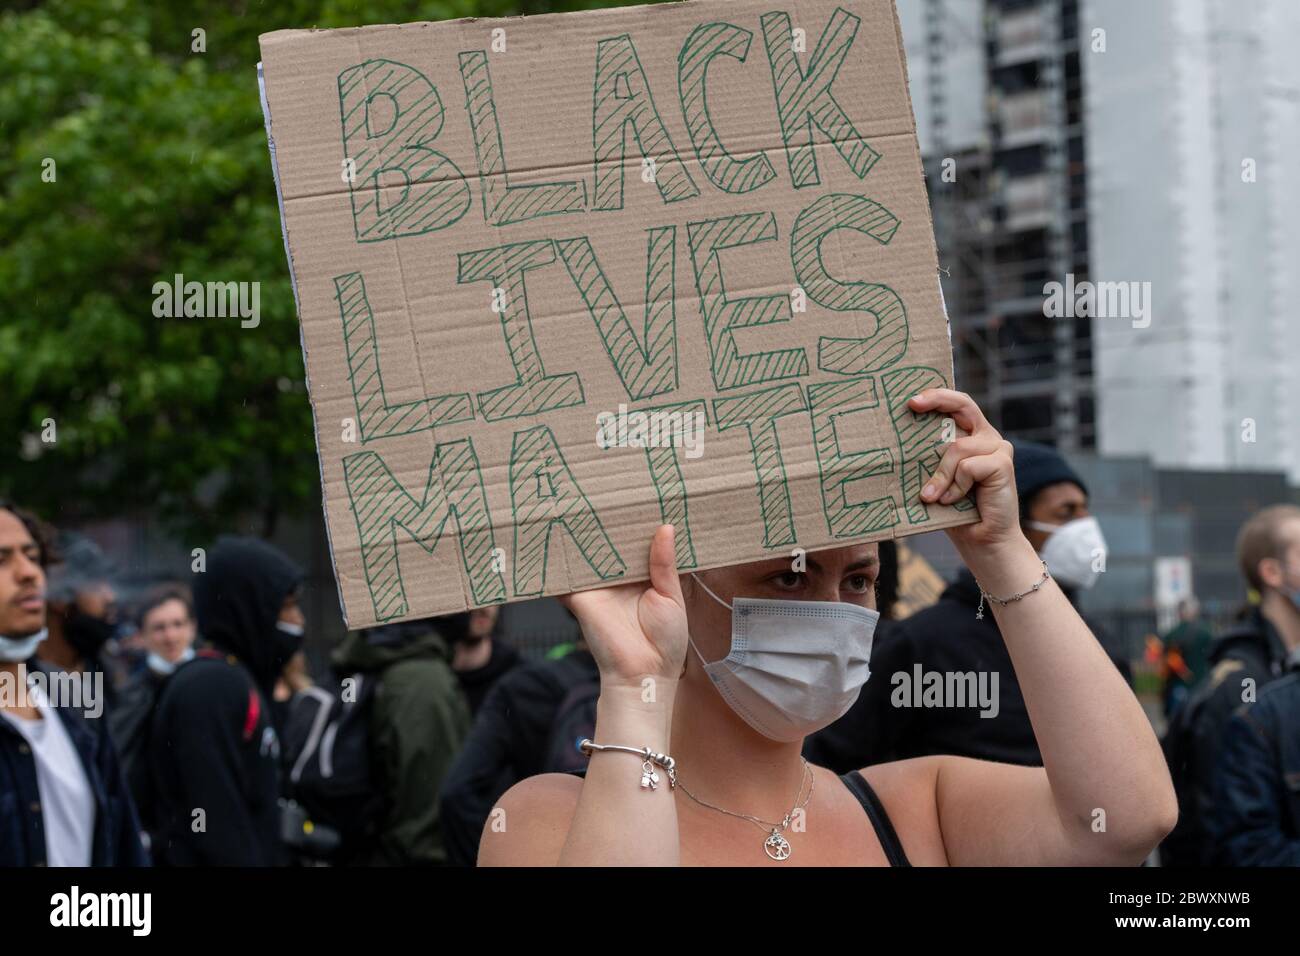 London, UK. 3rd June, 2020. Black Lives Matter demonstration in Whitehall London Credit: Ian Davidson/Alamy Live News Stock Photo